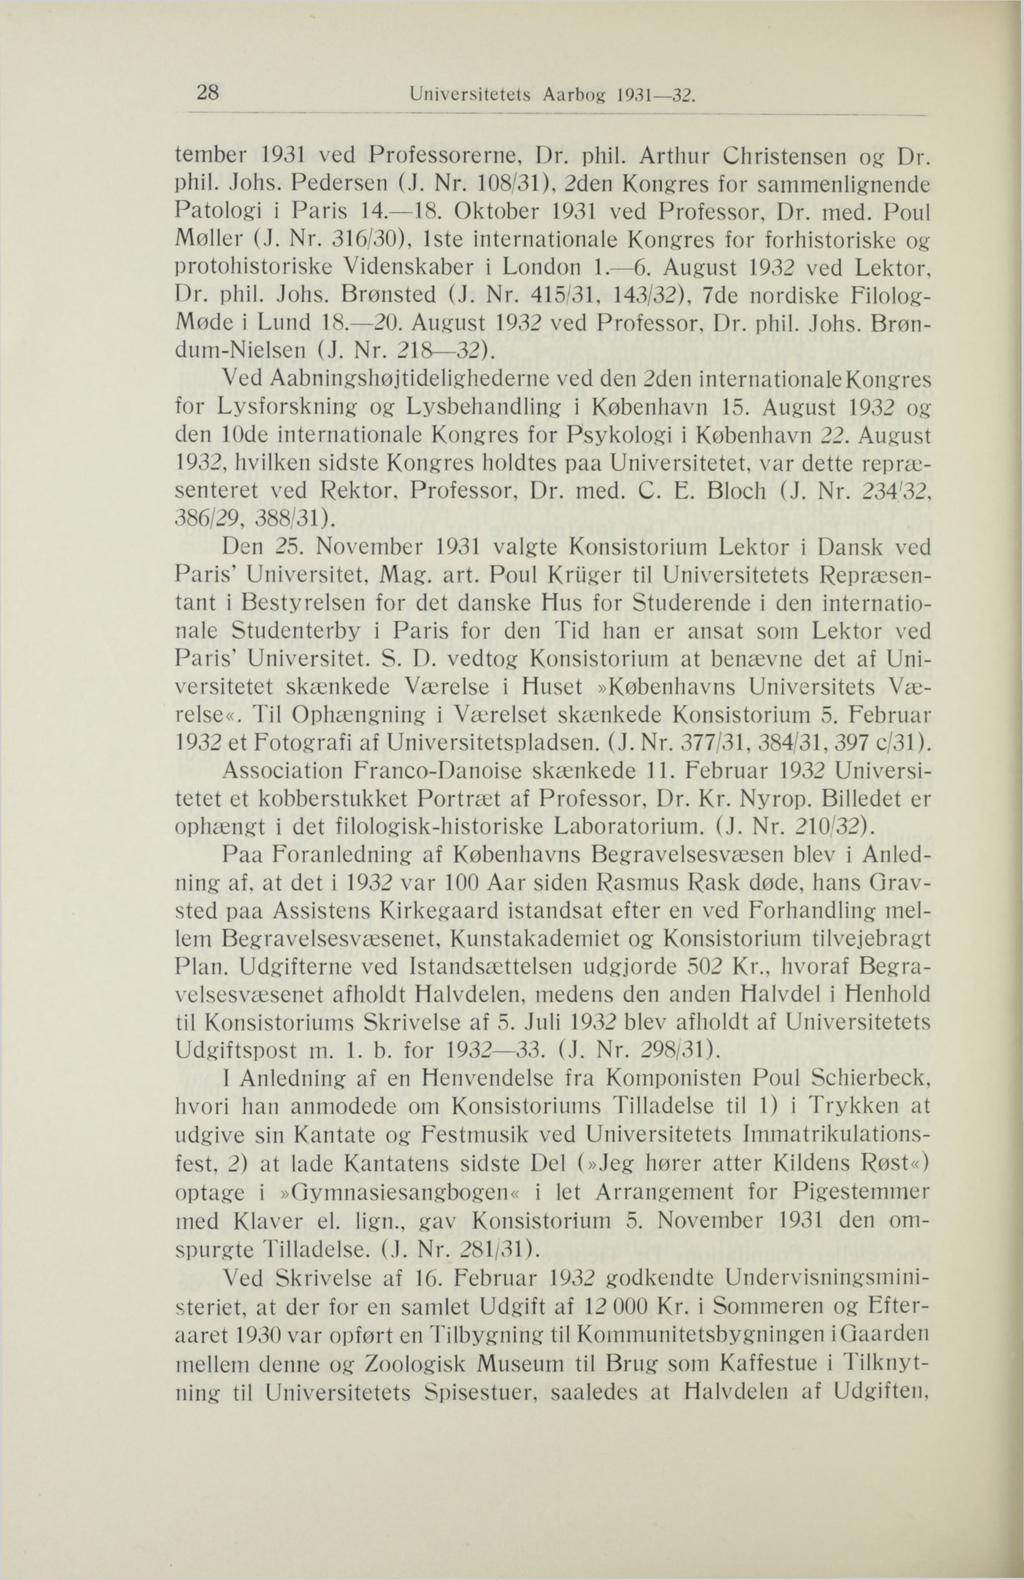 28 Universitetets Aarbog 1931 32. tember 1931 ved Professorerne, Dr. phil. Arthur Christensen og Dr. phil. Johs. Pedersen (J. Nr. 108/31), 2den Kongres for sammenlignende Patologi i Paris 14. 18.